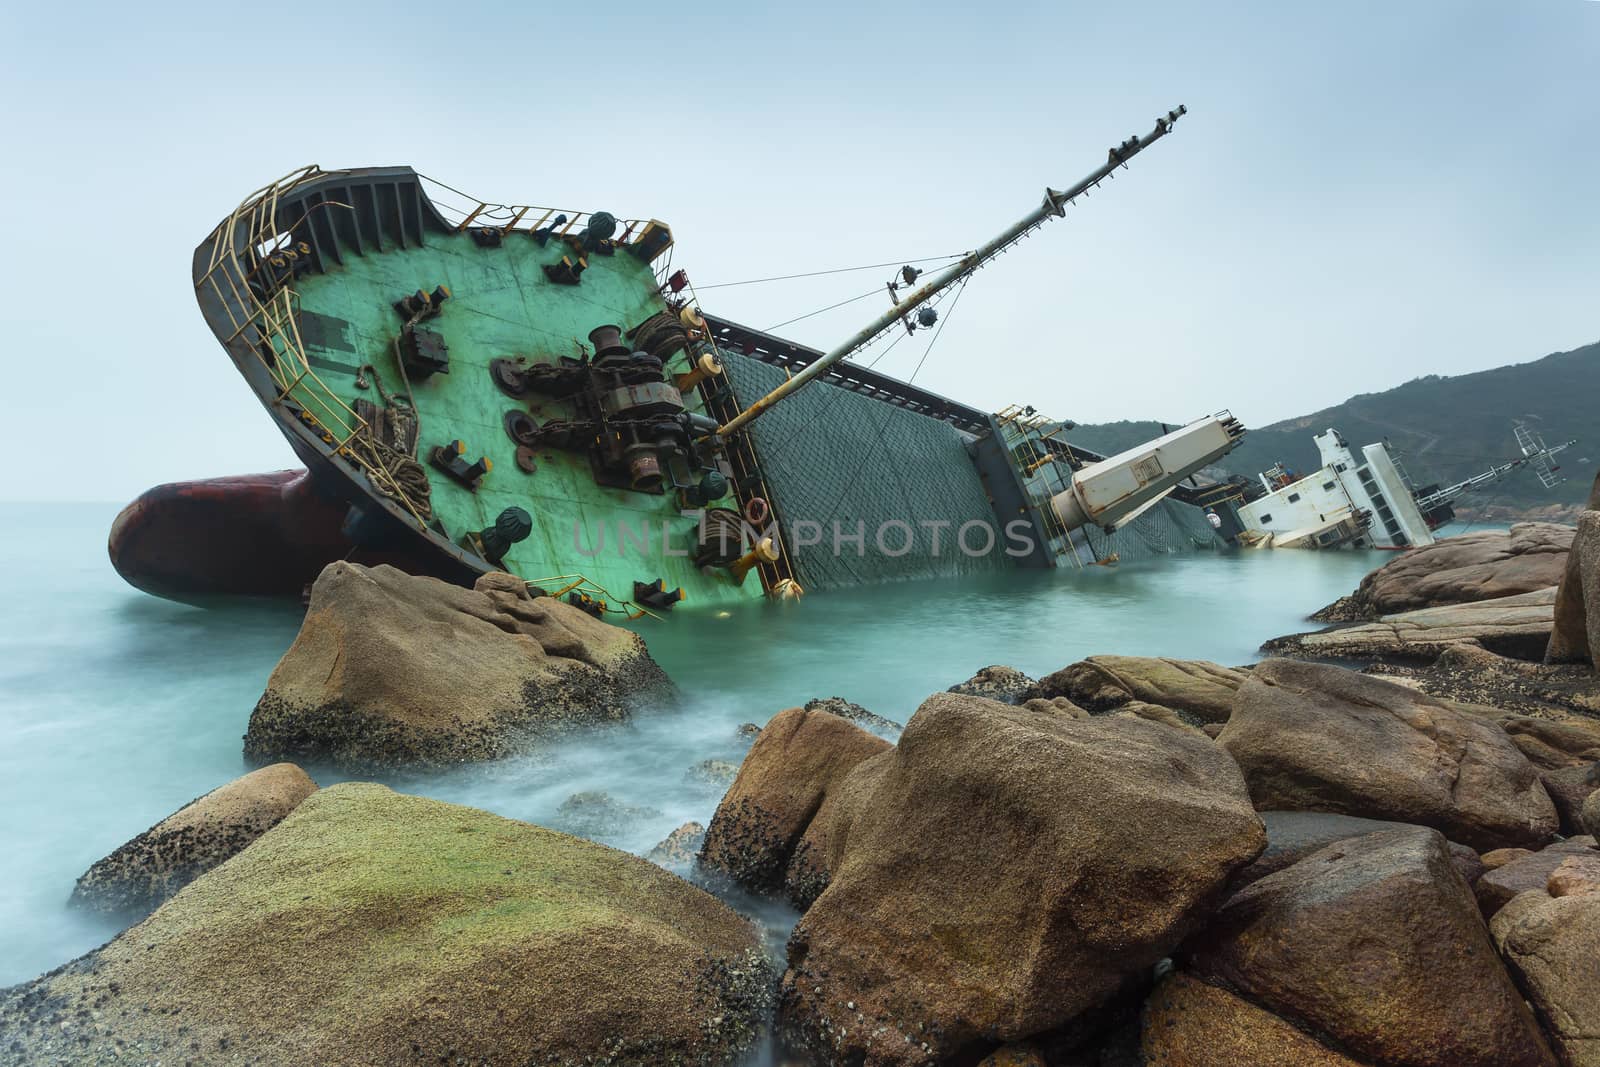 Wrecked ship along the rocky coast